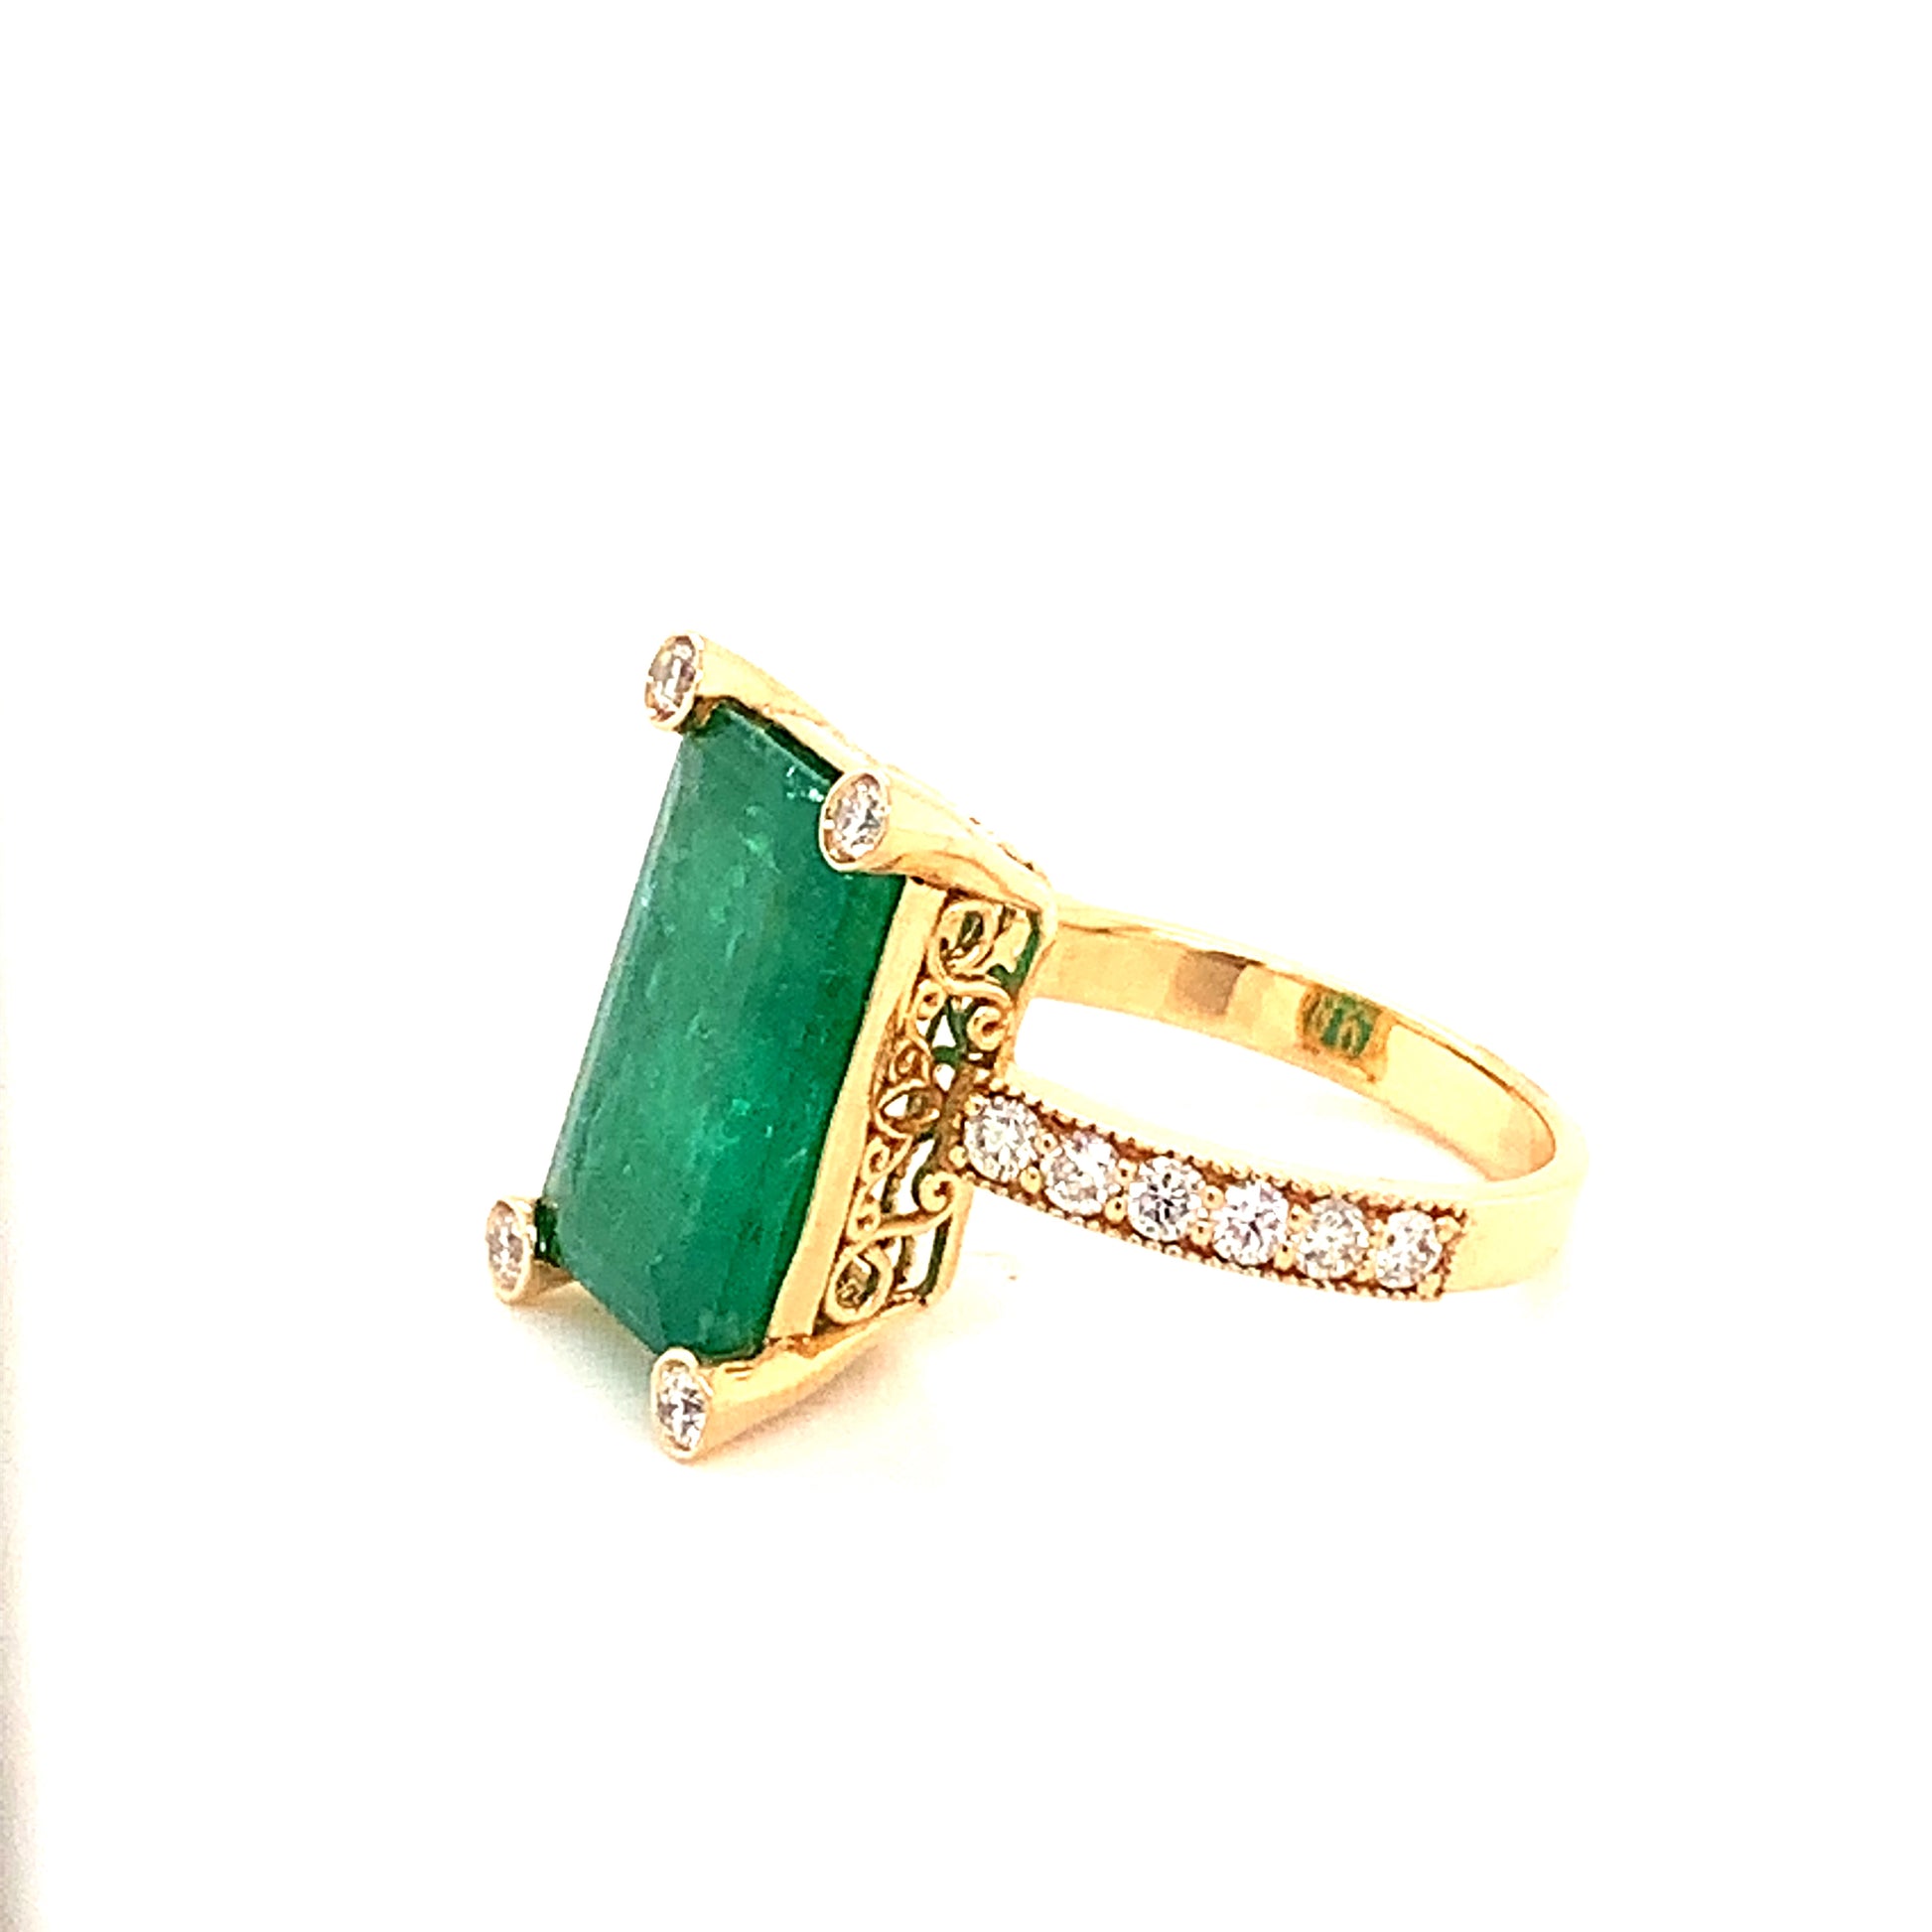 Natural Emerald Diamond Ring 14k Gold 4.37 TCW GIA Certified $6,950 111875